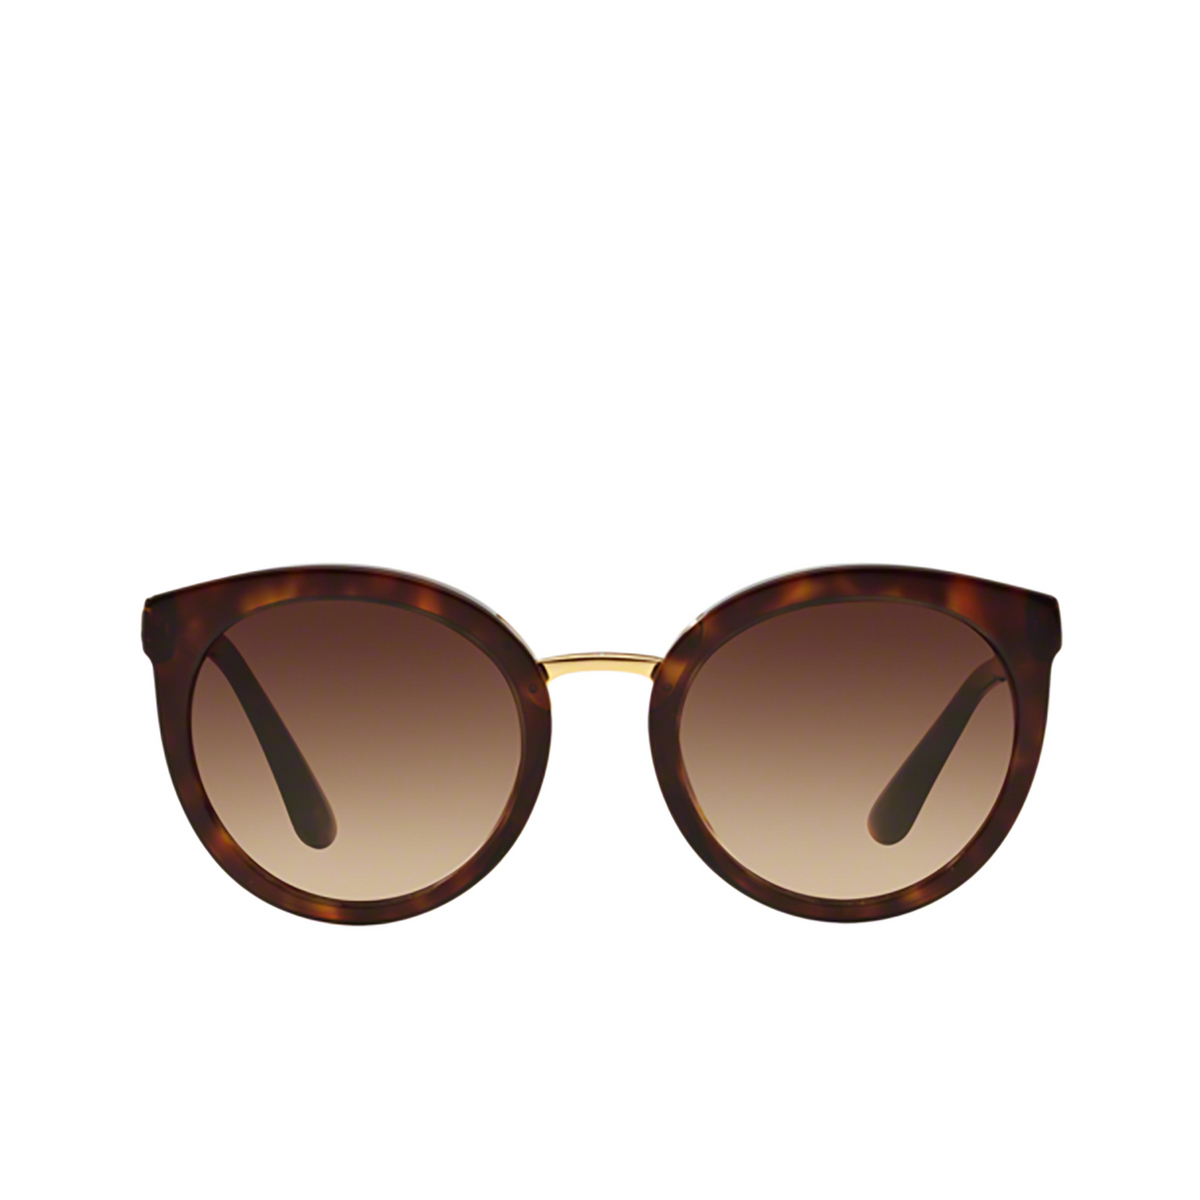 Dolce & Gabbana DG4268 Sunglasses 502/13 HAVANA - front view